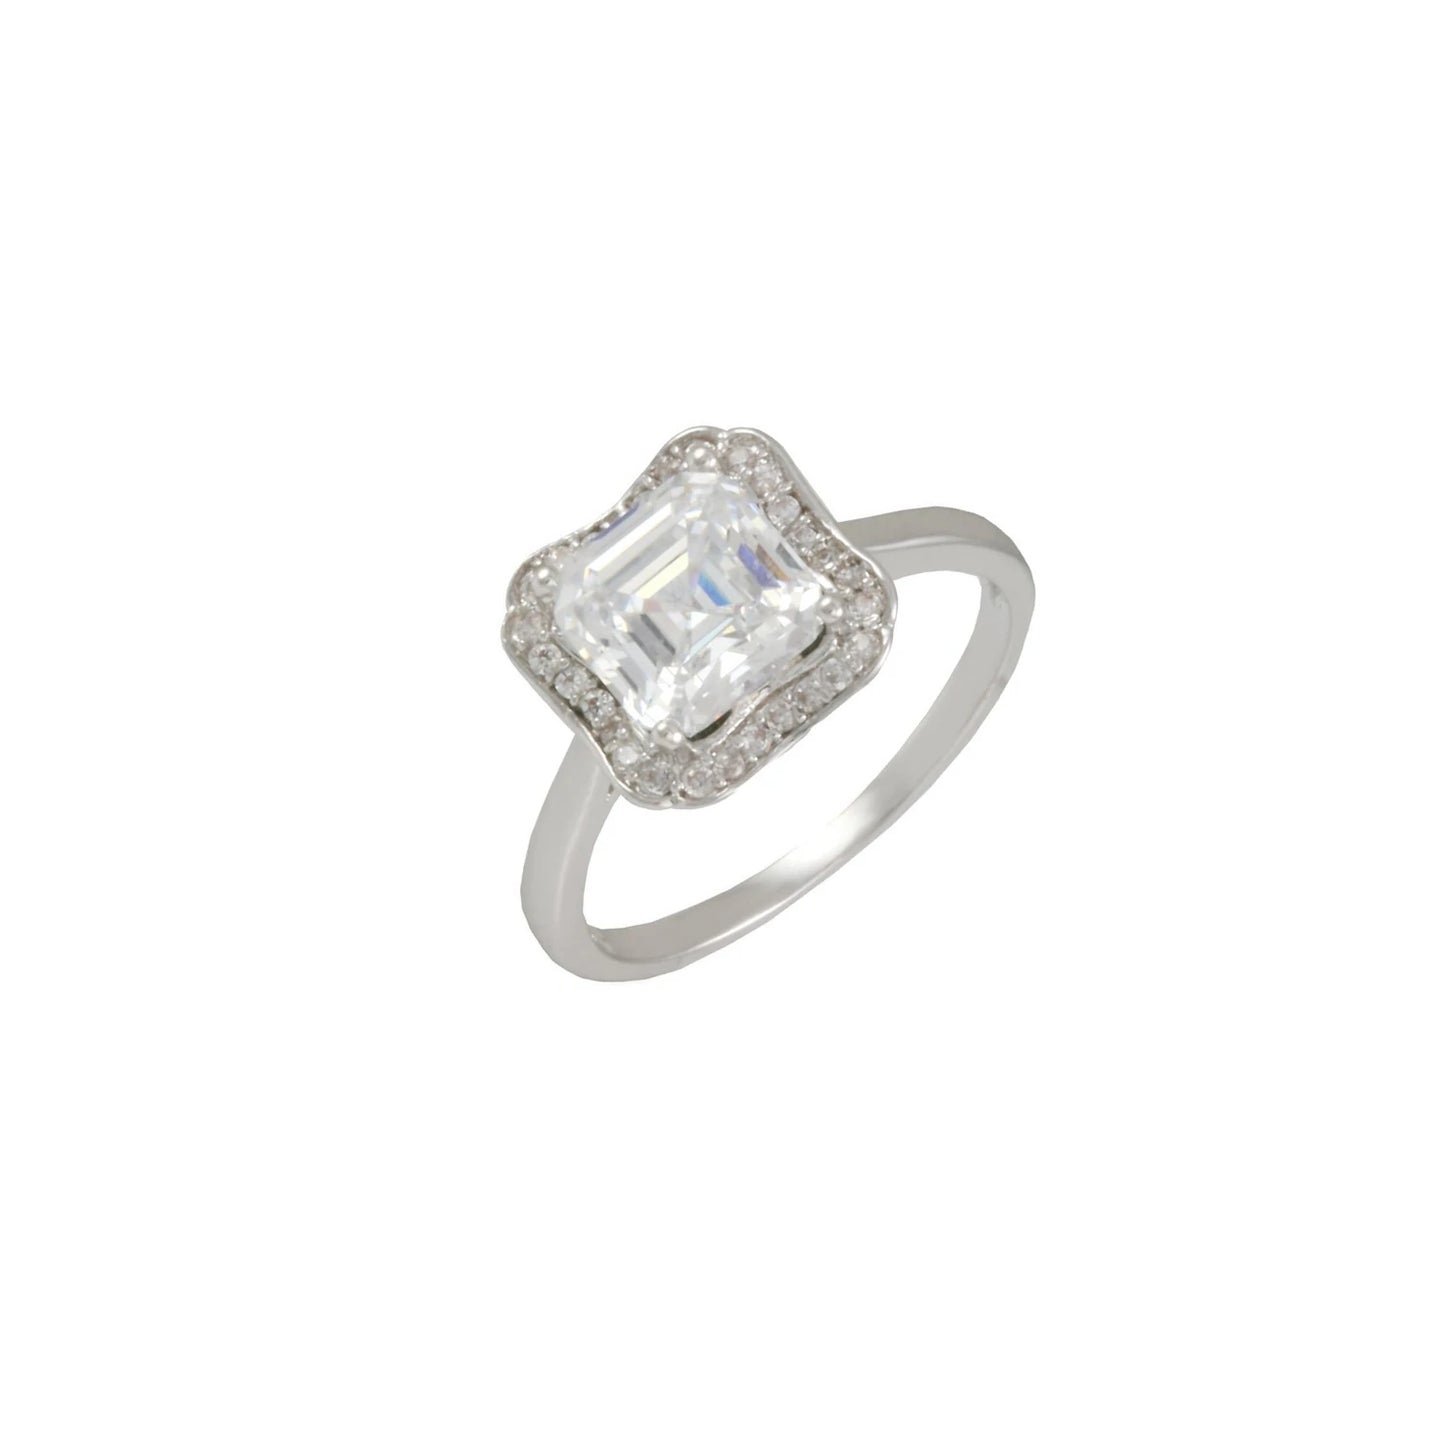 Remi 2 Ct. Radiant Cut CZ Diamond Ring, Silver - Zahra Jewelry